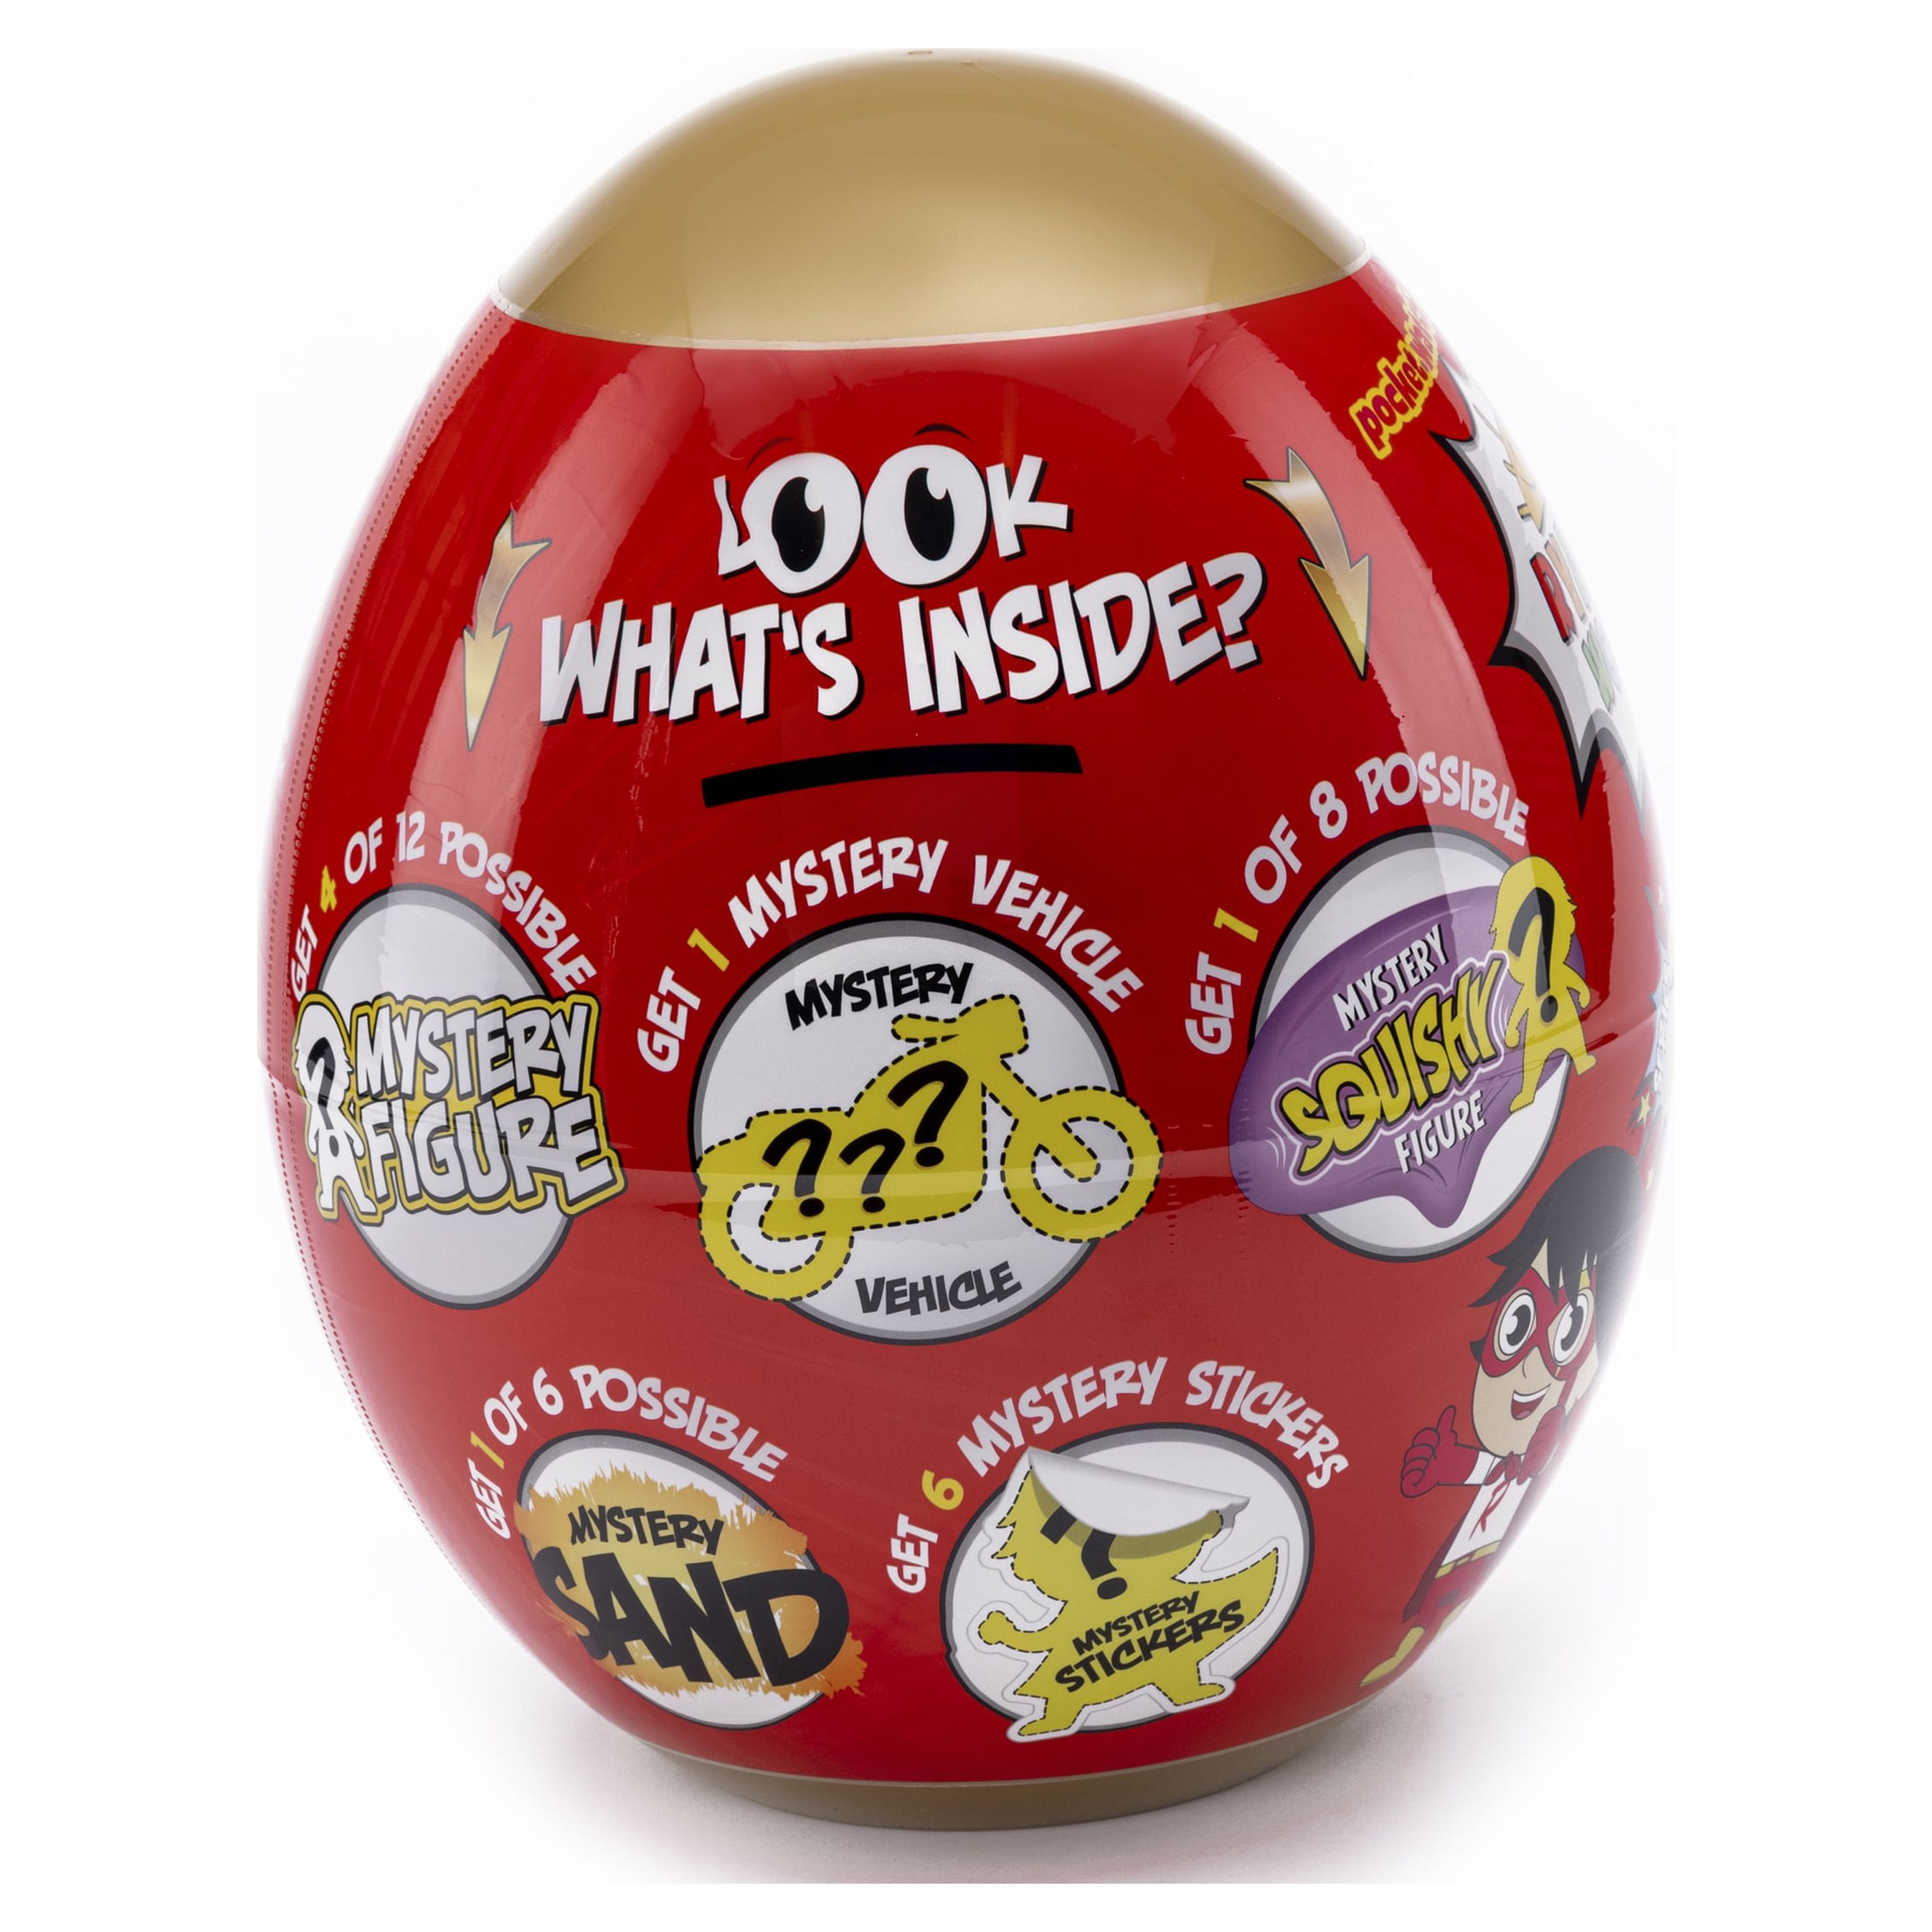 Ryans World Golden Giant Mystery Egg - Walmart Exclusive - image 3 of 6